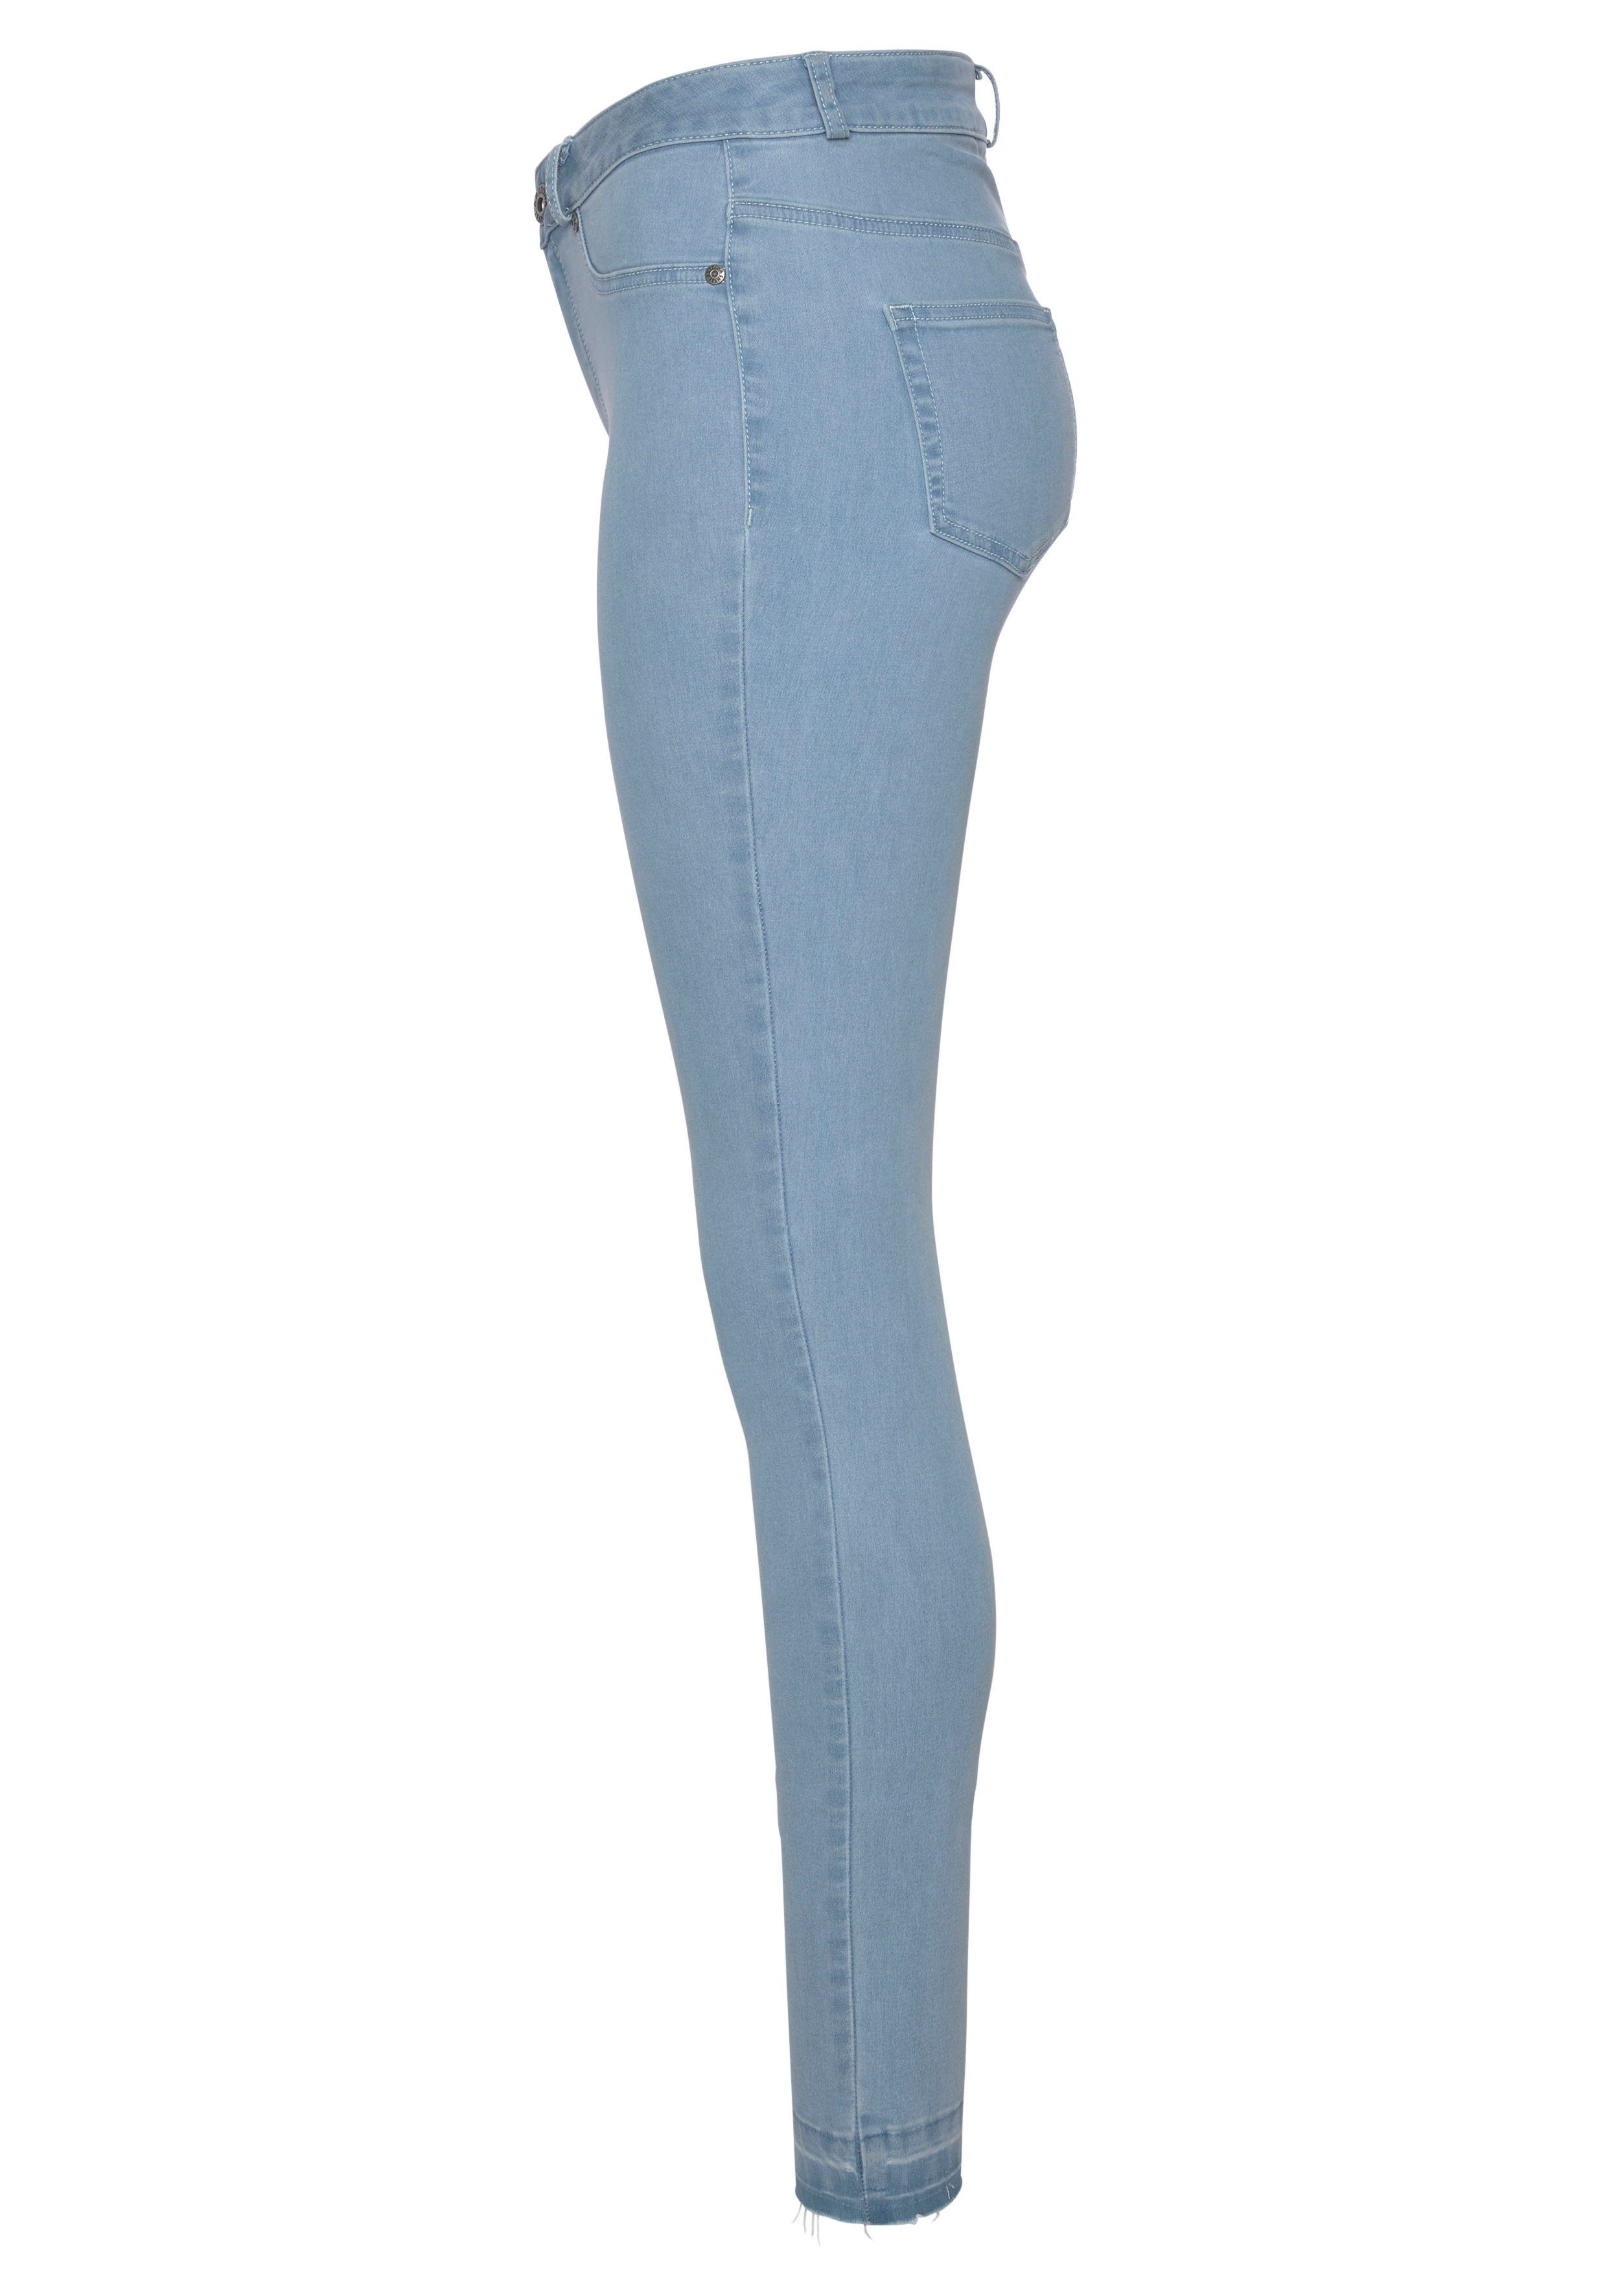 Arizona Skinny-fit-Jeans Ultra Stretch offenem mit High light-blue Saum Waist